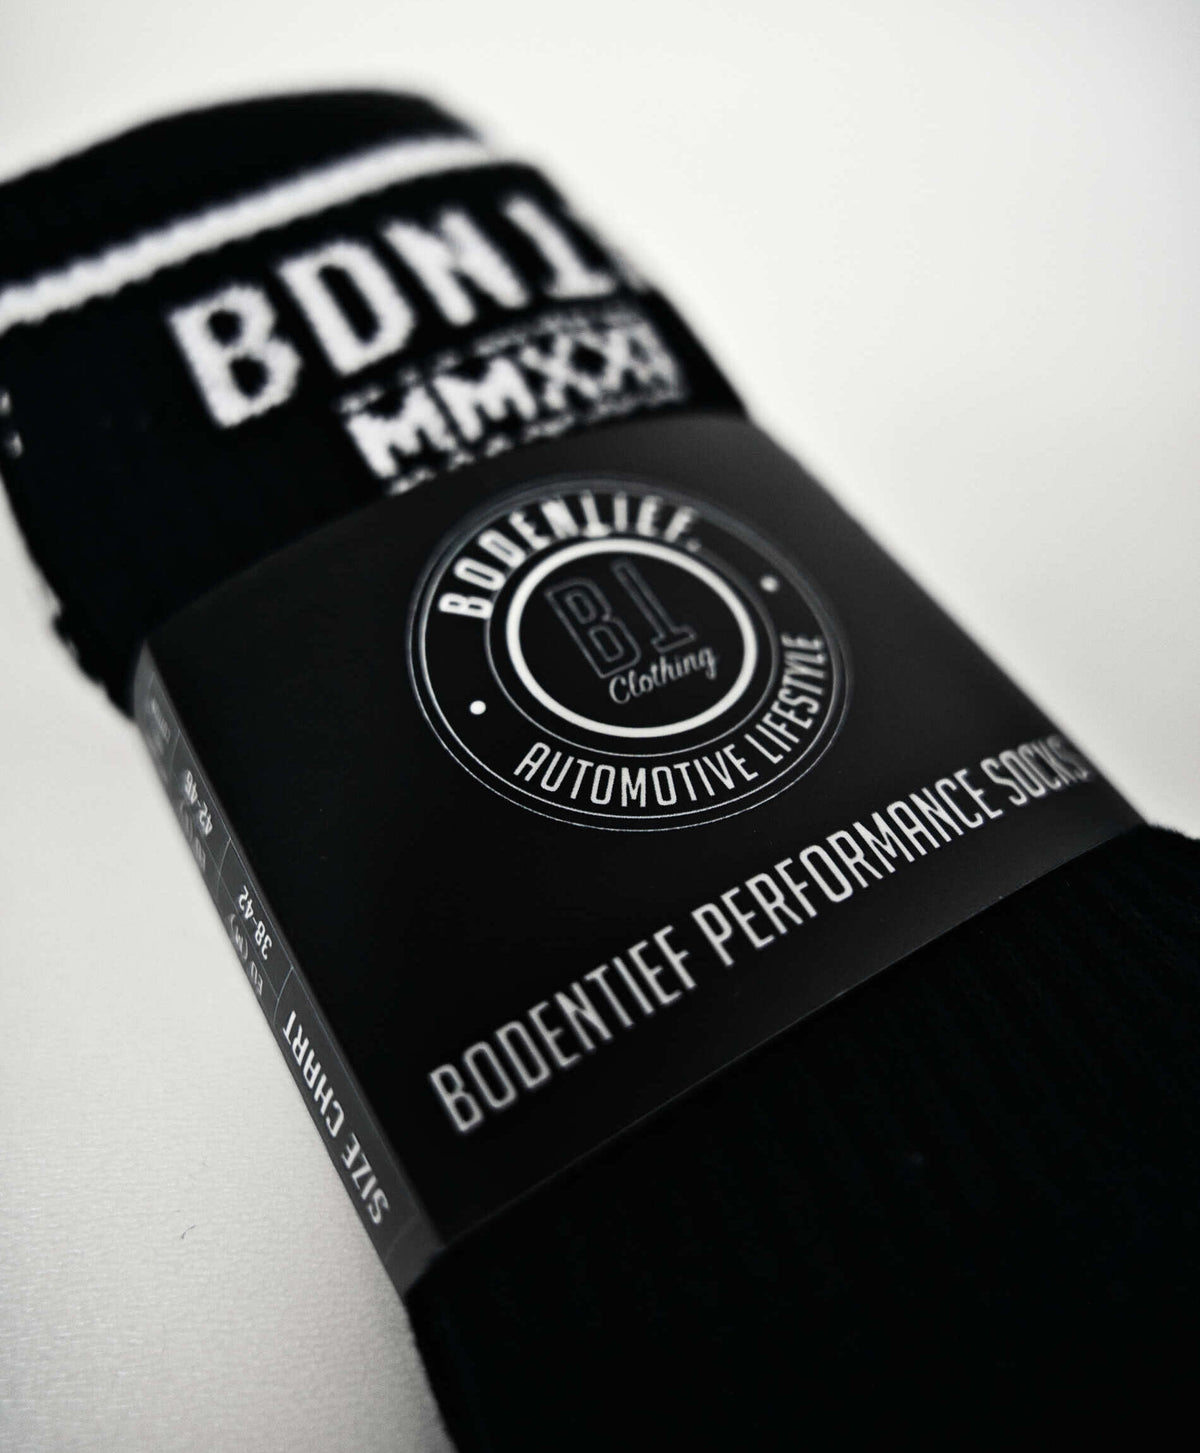 bodentief. Socken -WORLD BLACK Pack-